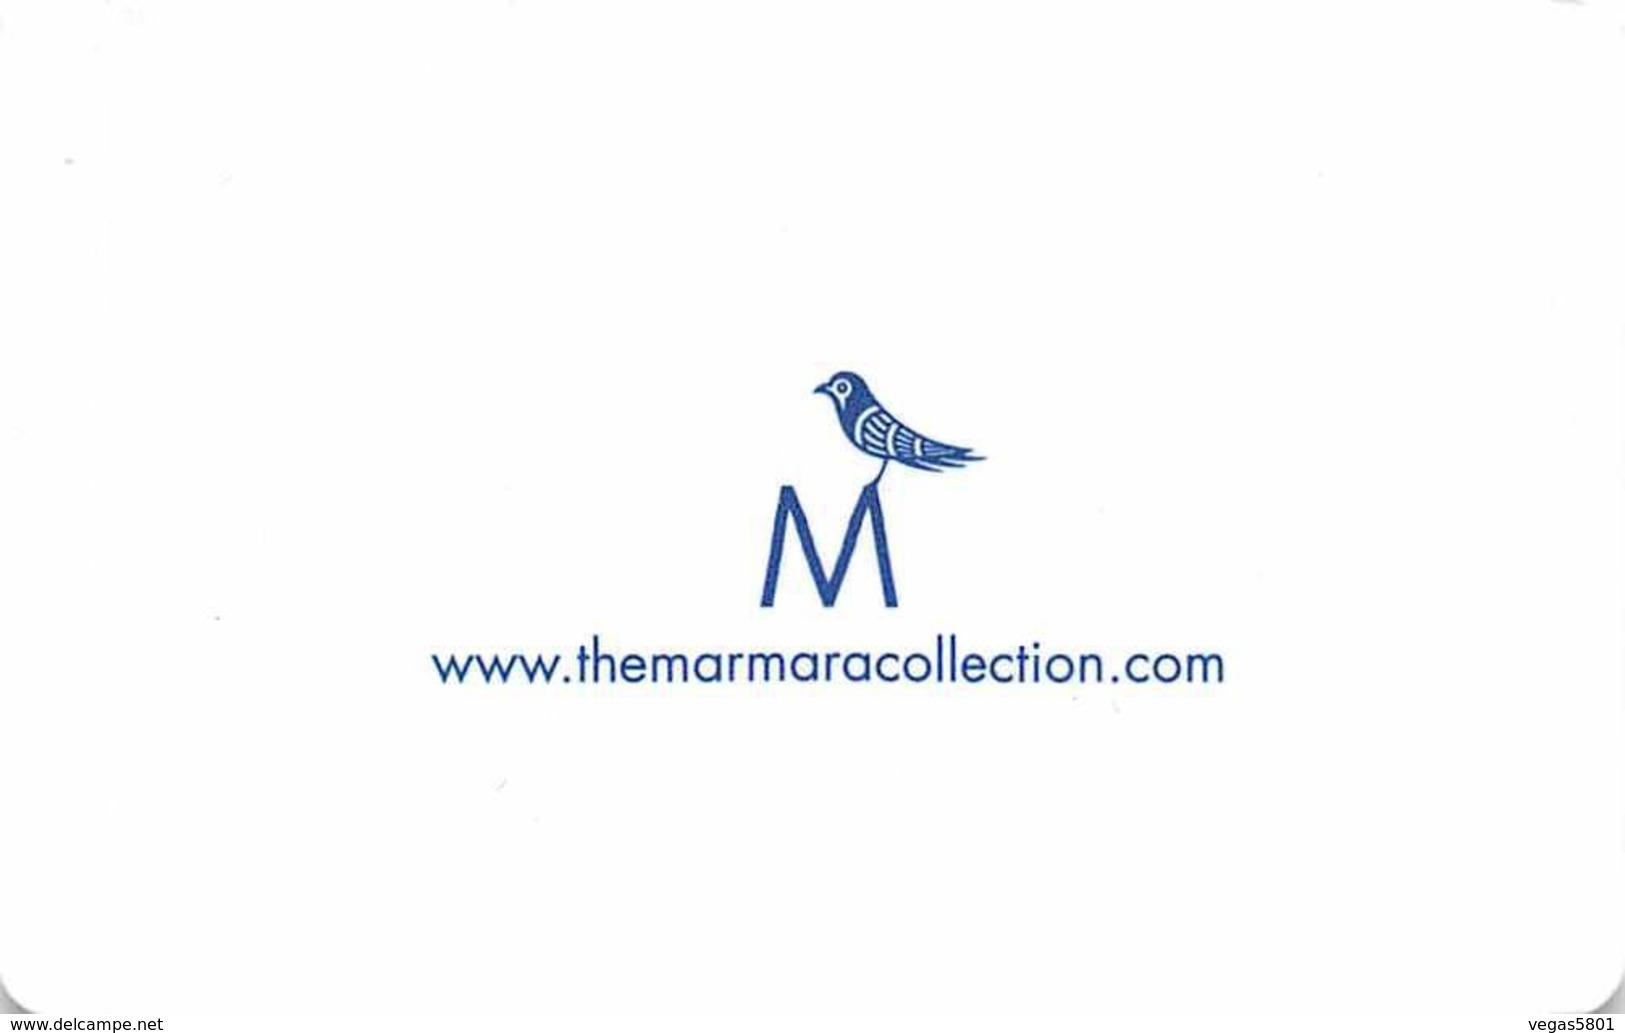 THE MARMARA COLLECTION - Turkey - Hotel Room Key Card, Hotelkarte, Schlüsselkarte, Clé De L'Hôtel - Hotelkarten